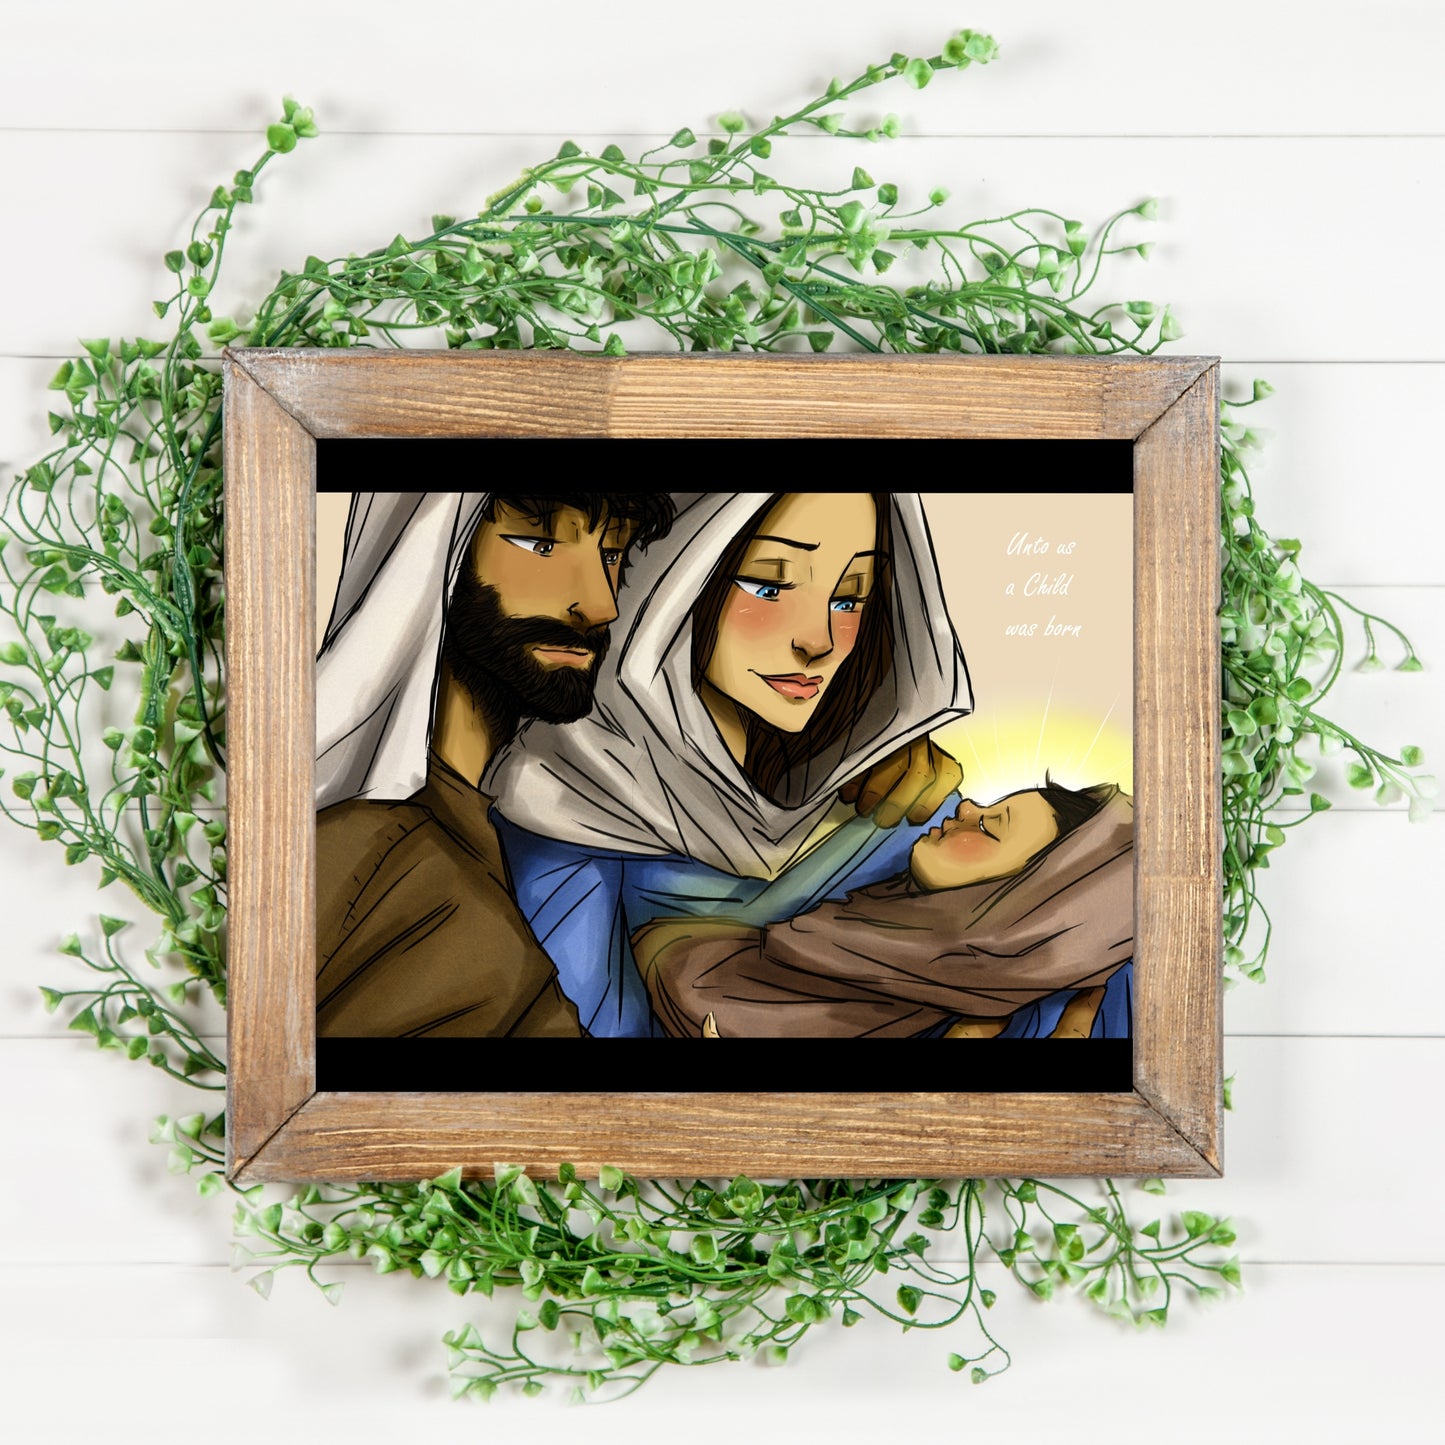 Baby Jesus, Mary, & Joseph Original Art | Inspirational Art Print shown in Rustic Wood Frame | Reads... Unto us a Child was born | art by California artist Megan B | oak7west.com